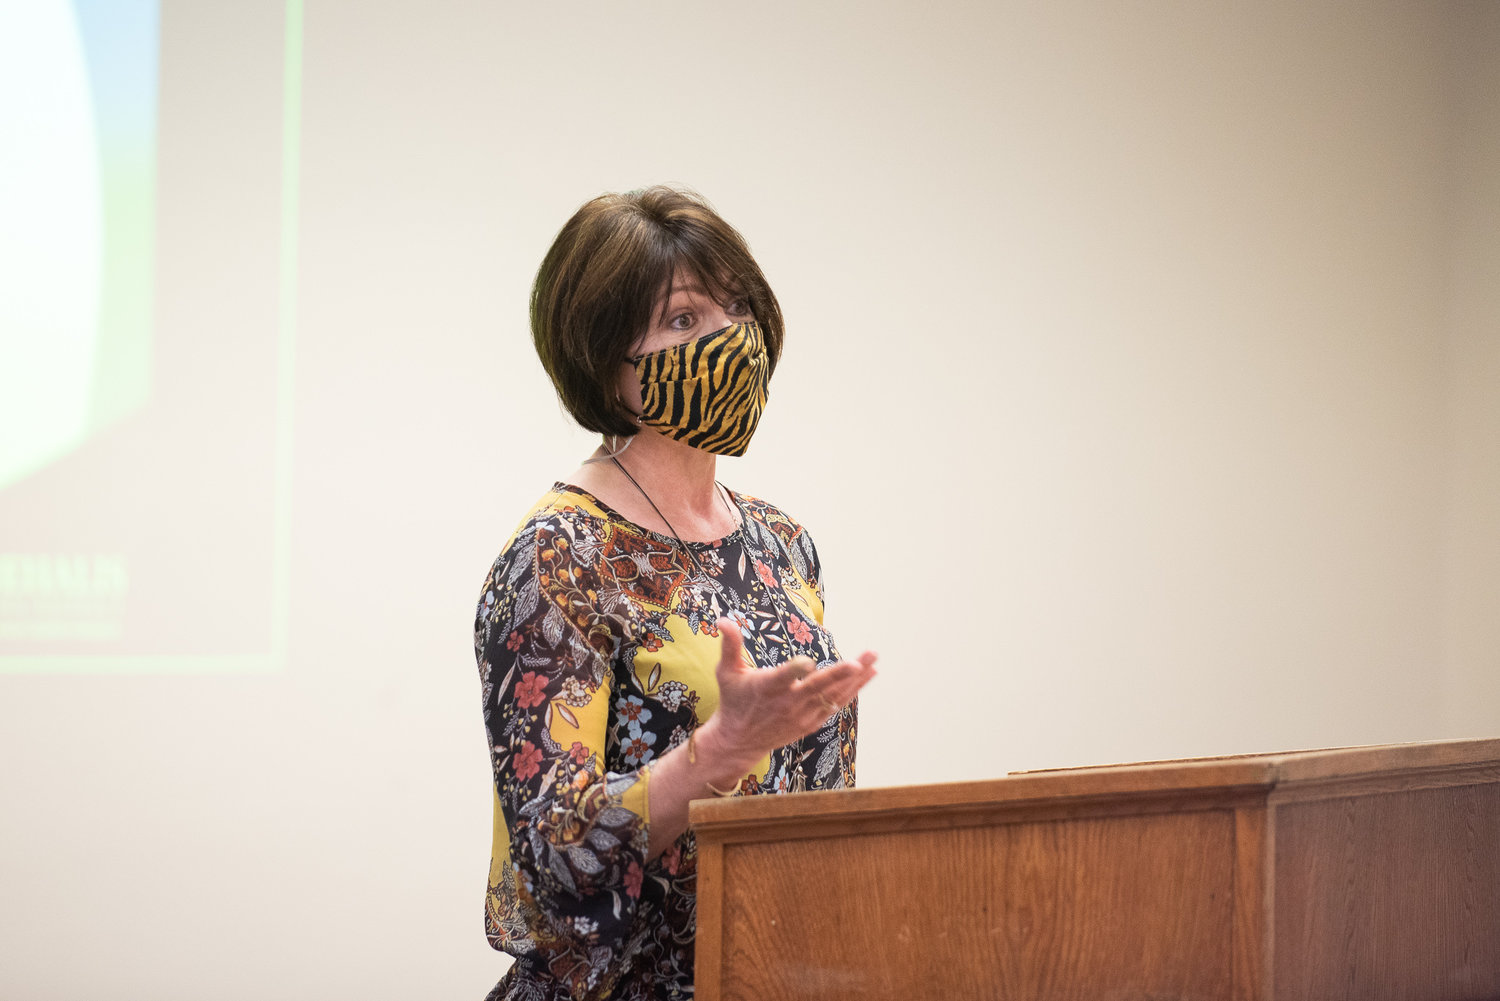 Rachel Dorsey speaks during a Chehalis School Board meeting on Tuesday.